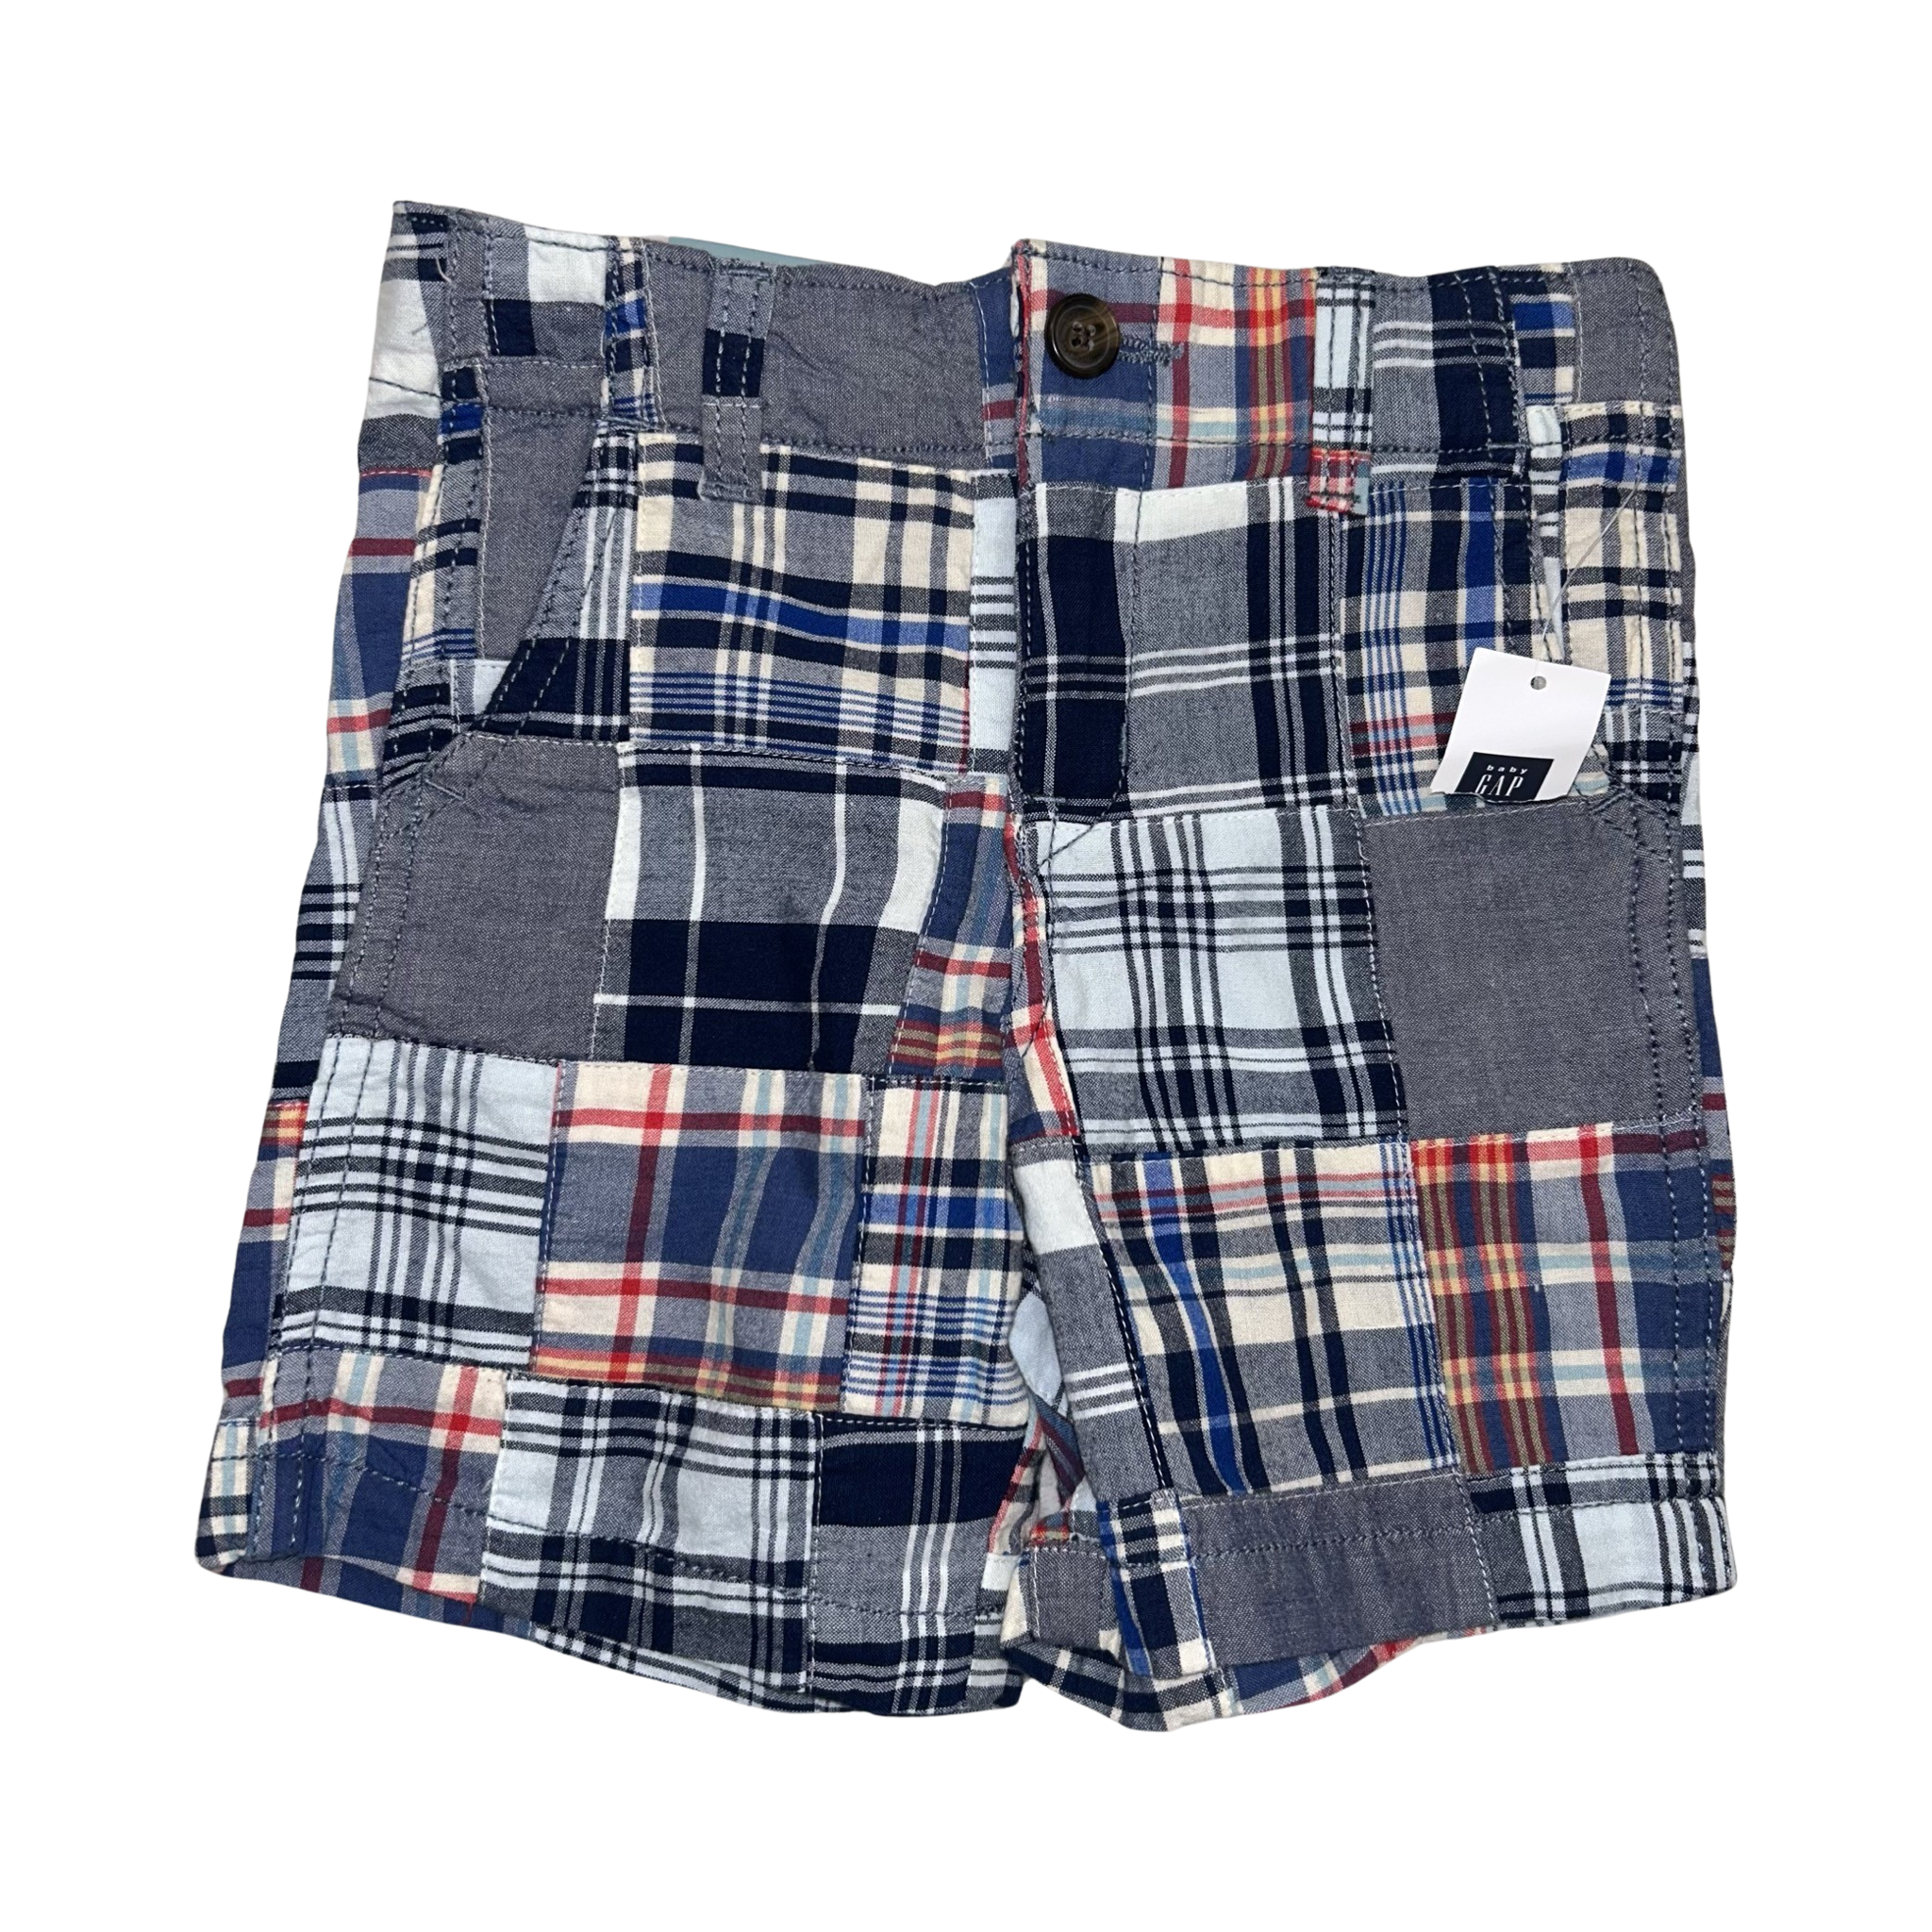 NWT shorts by Gap size 3